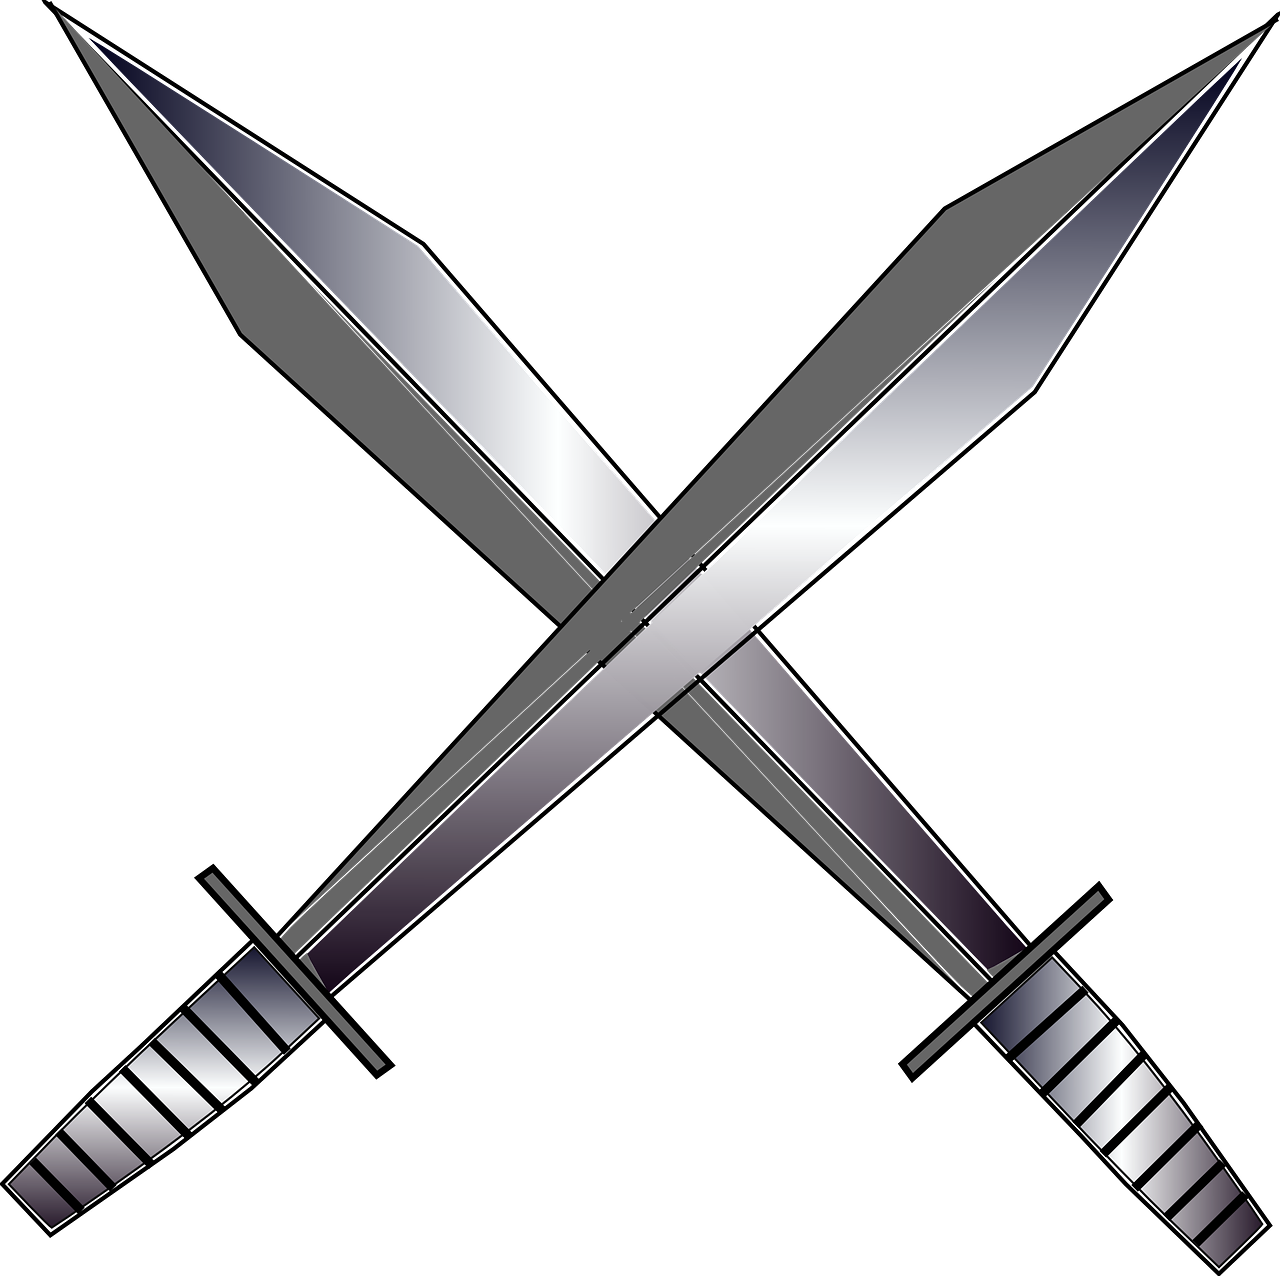 Black Crossed Swords Clip Art at  - vector clip art online,  royalty free & public domain